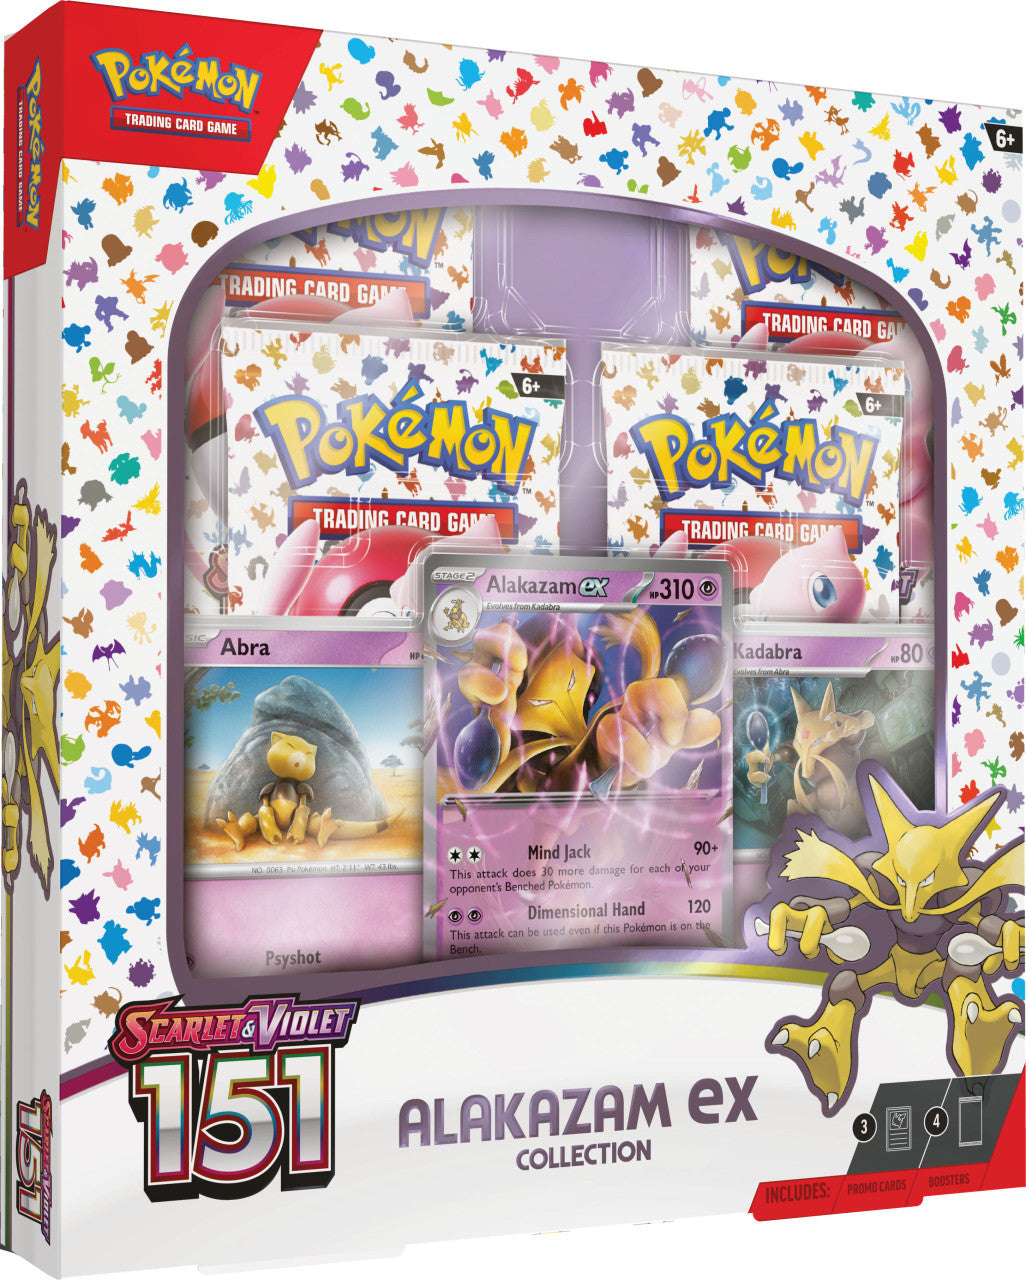 Pokemon Scarlet & Violet 151 Alakazam ex Collection Box